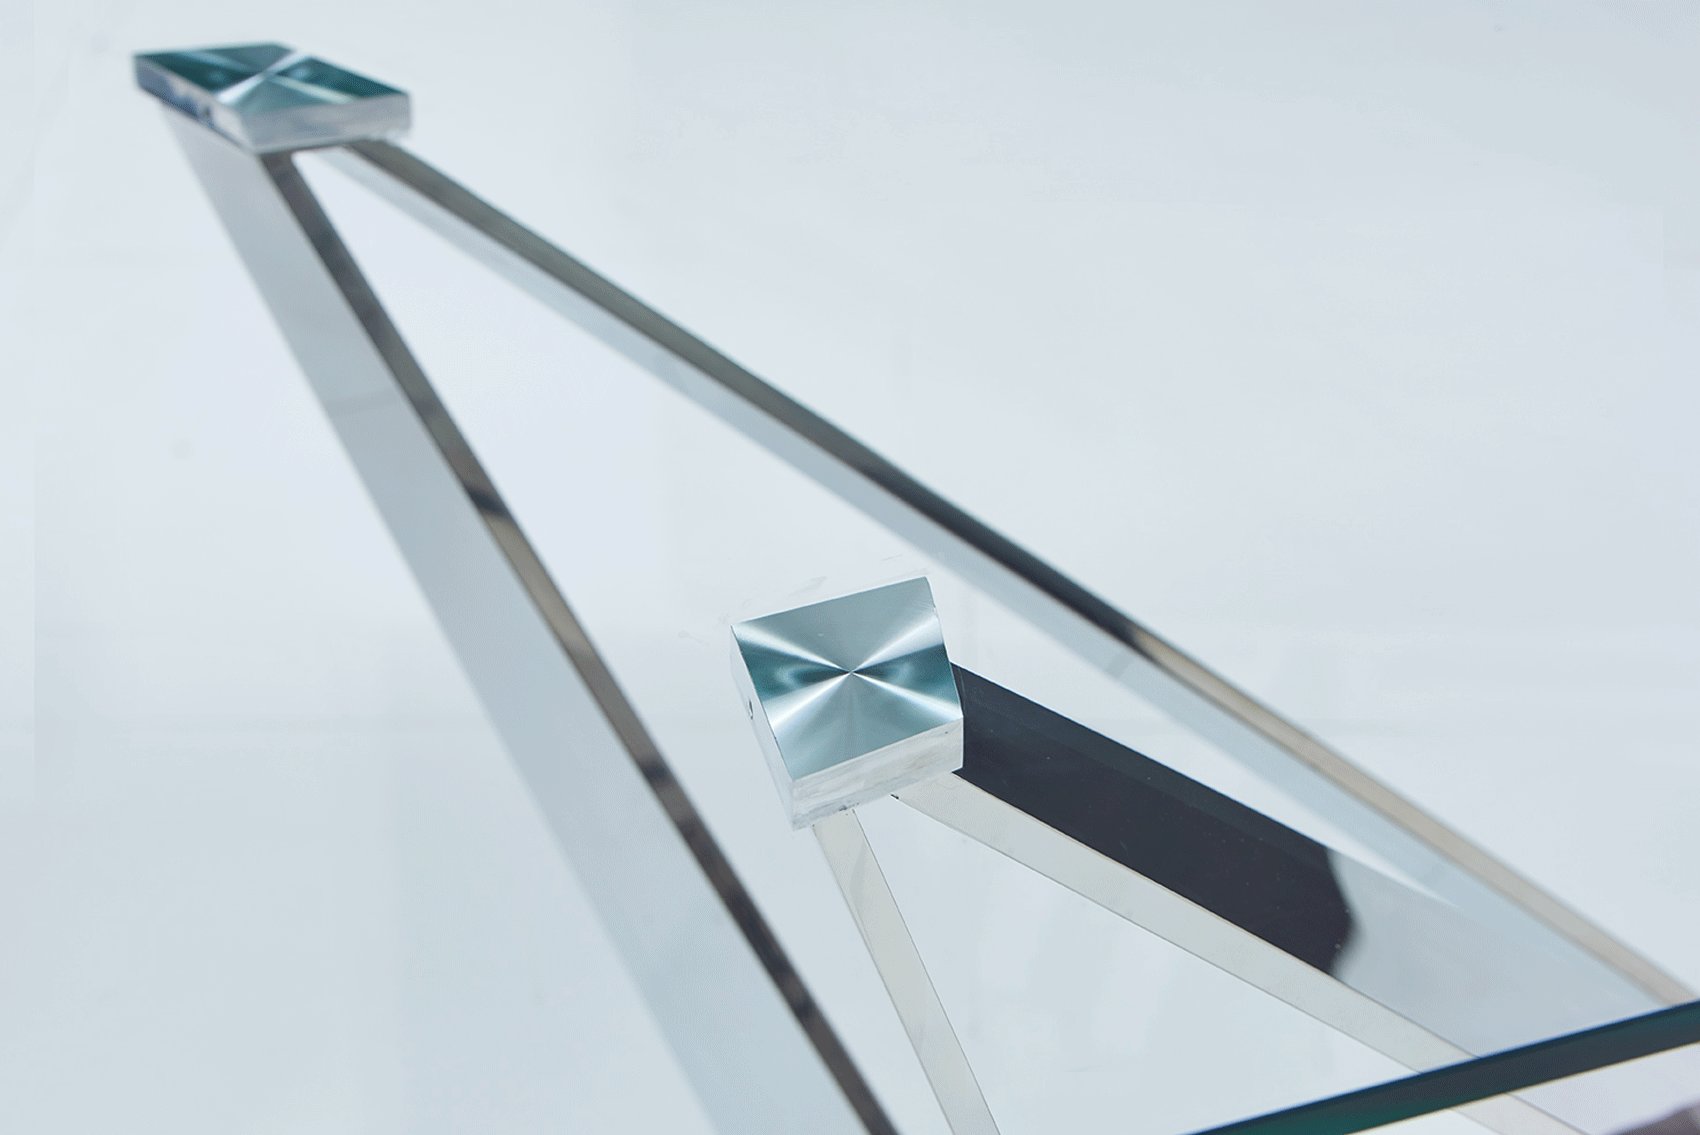 Exclusive Rectangular Glass Top Modern Dining Set